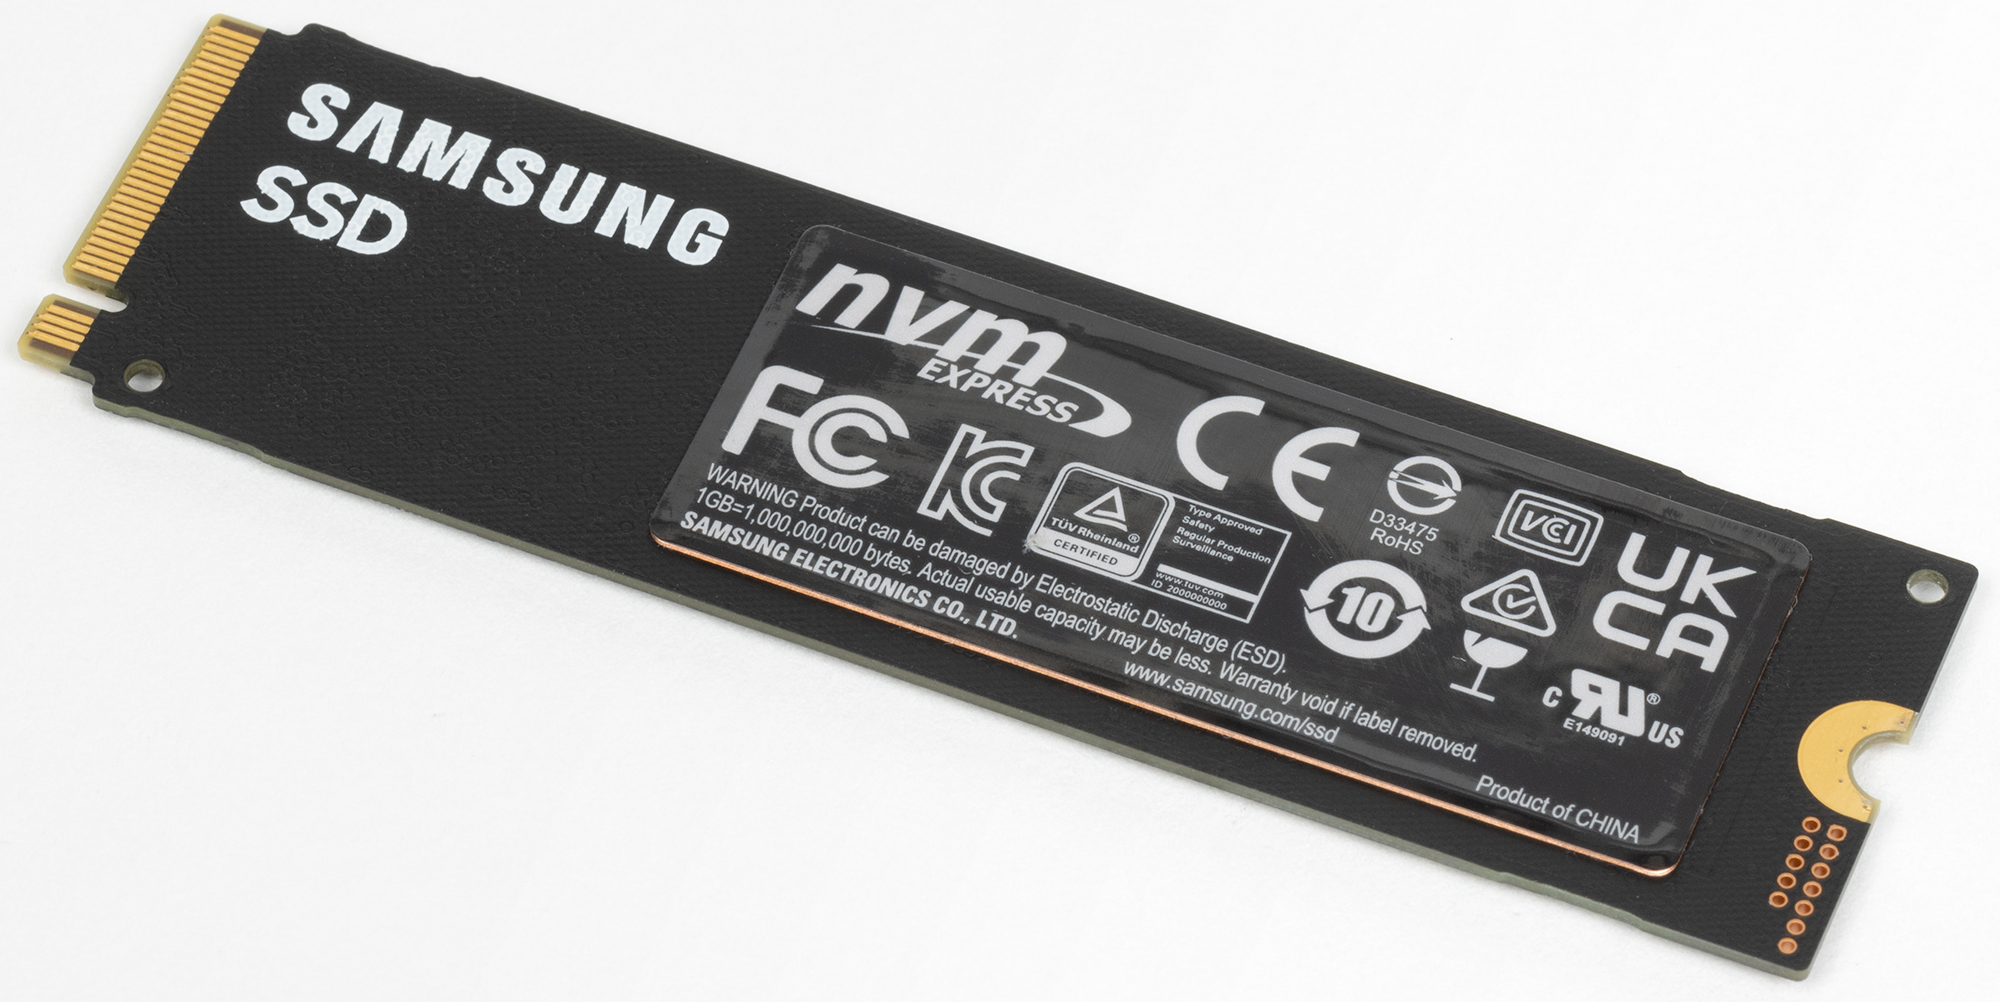 Ssd накопитель samsung 980 m 2 2280. SSD накопитель Samsung 980 Pro m.2 2280 2 ТБ. SSD Samsung 980 Pro 1тб в PS 4. Ссд.